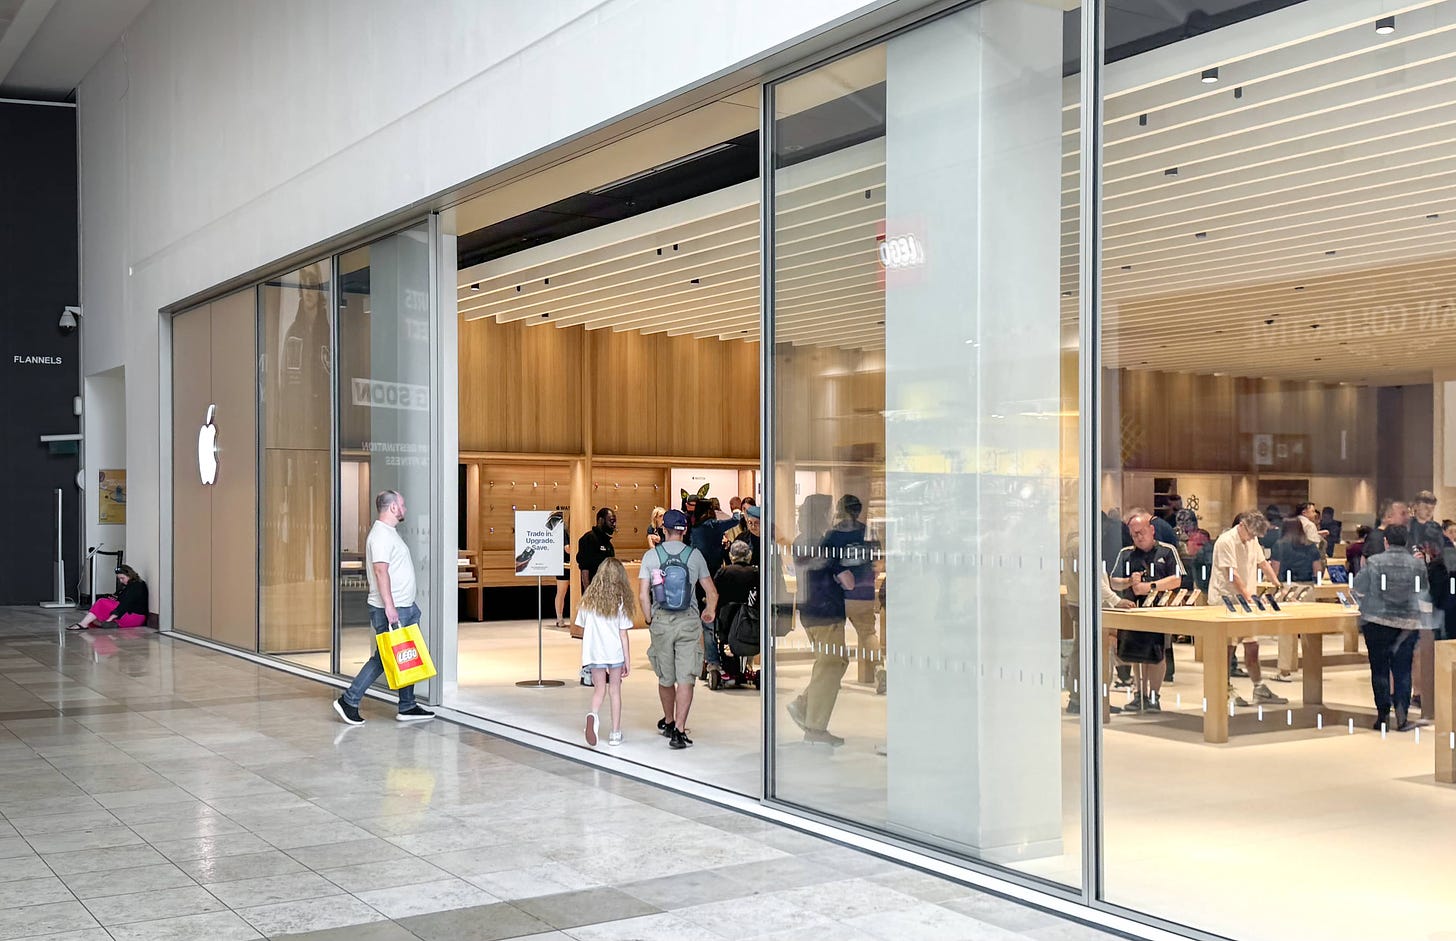 The entrance to Apple Milton Keynes. Customers enter through the sliding glass doors.